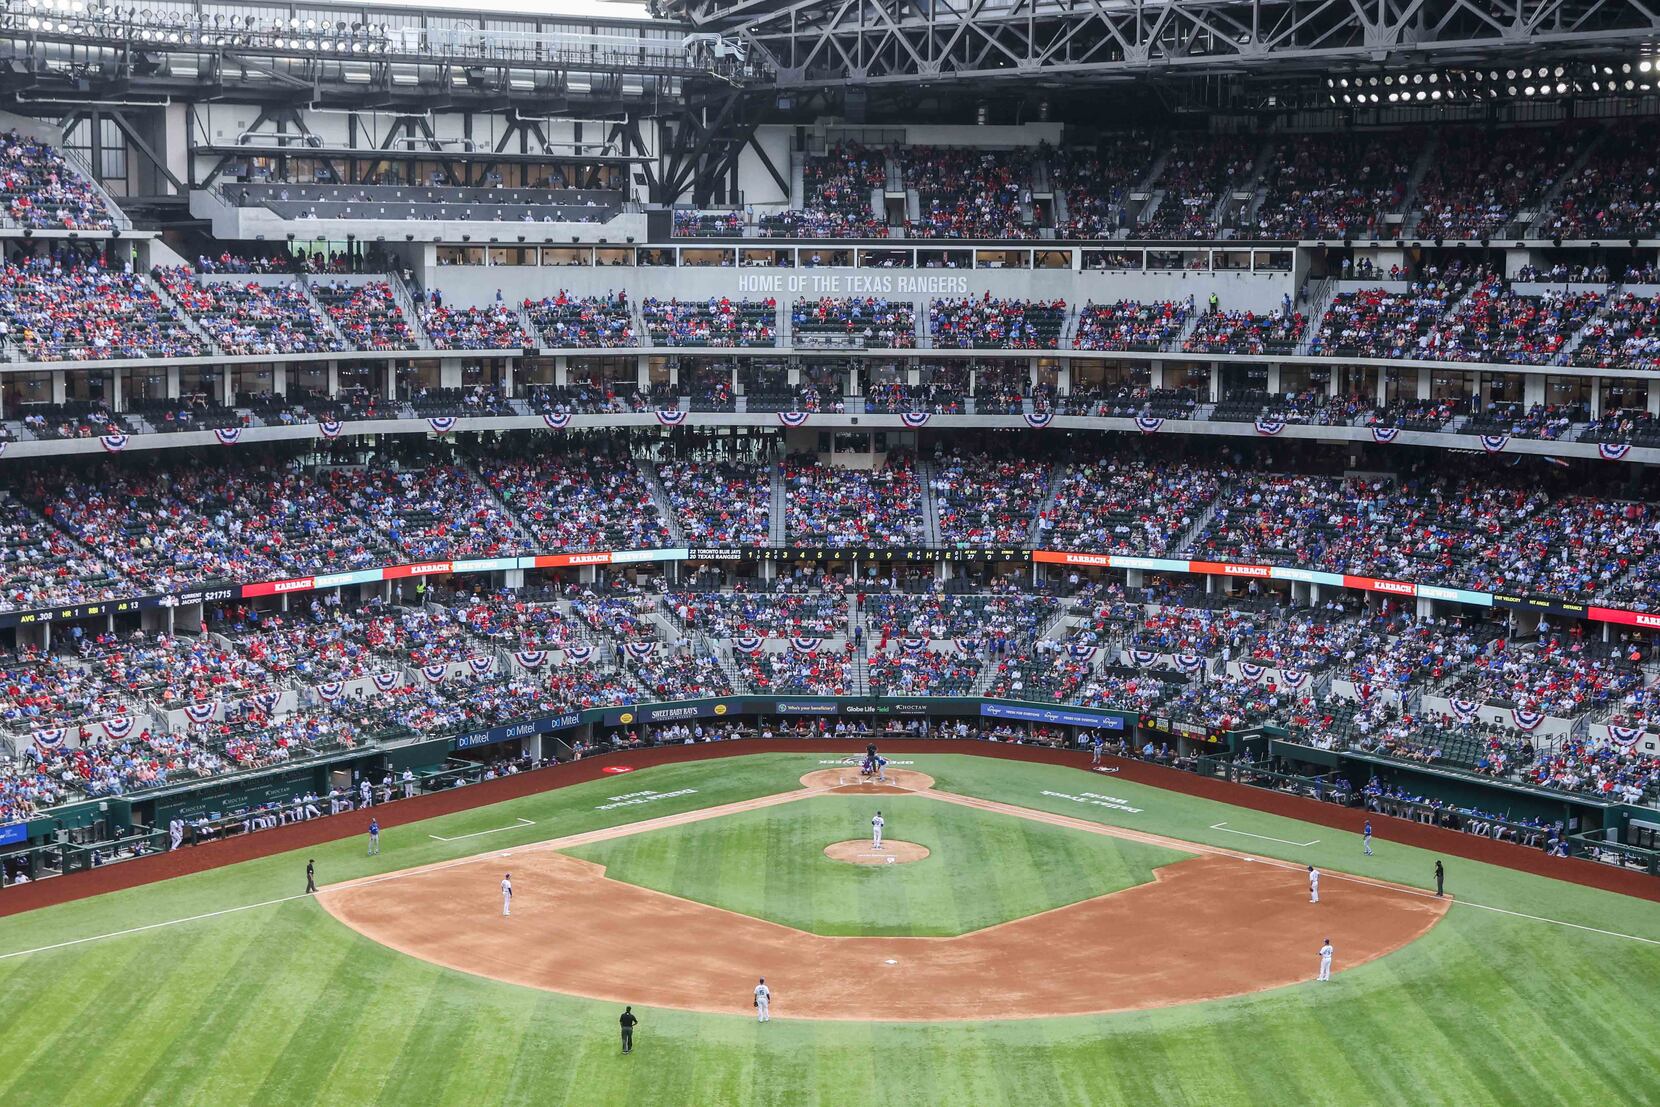 Major League Baseball has a diversity problem, experts say. This